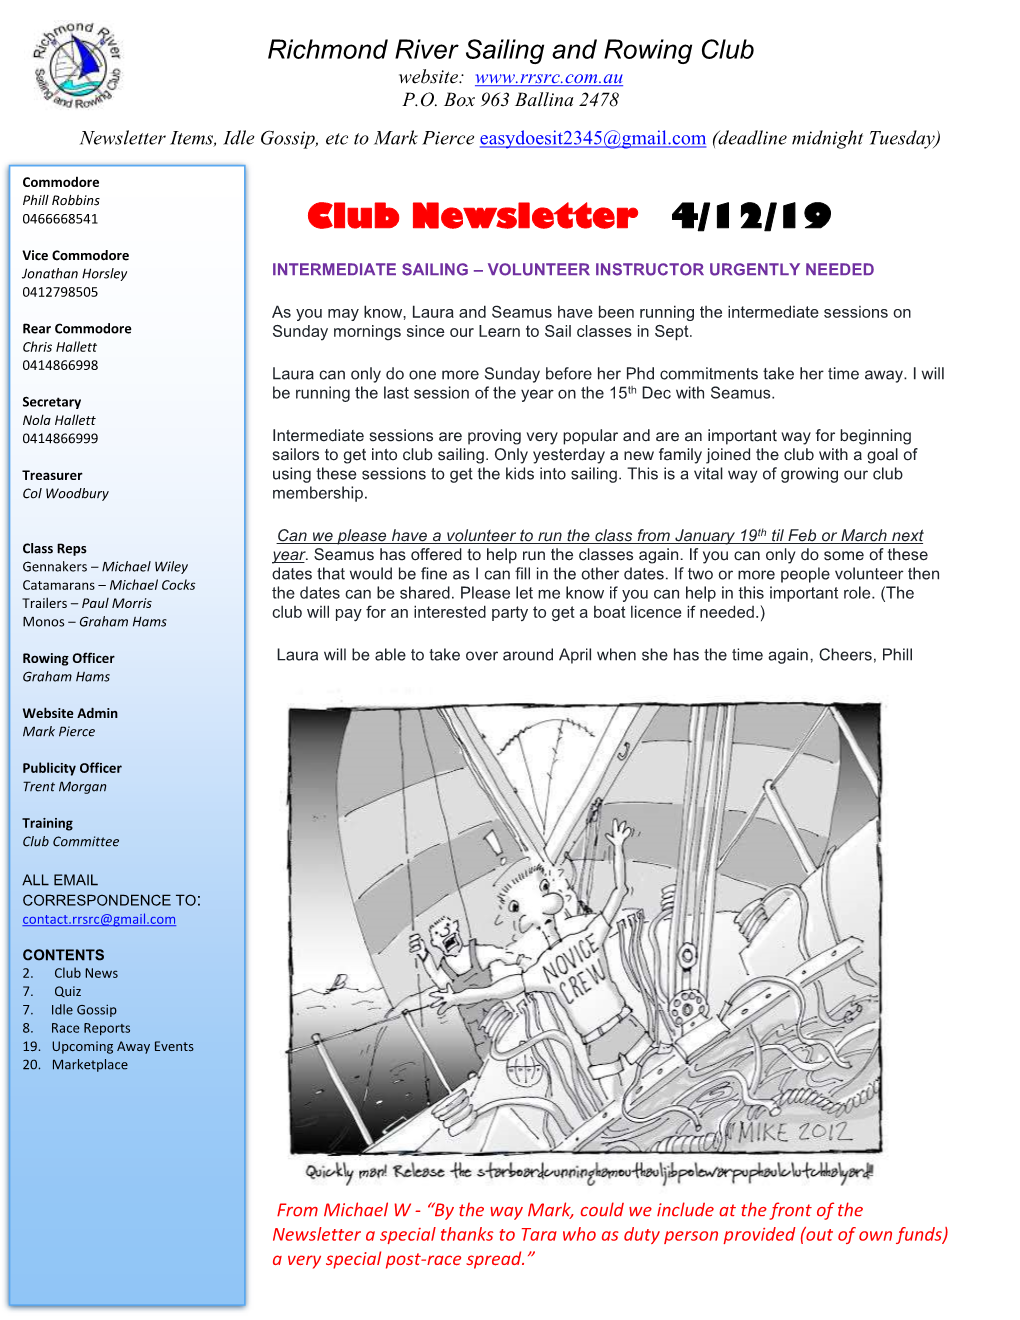 Club Newsletter 4/12/19